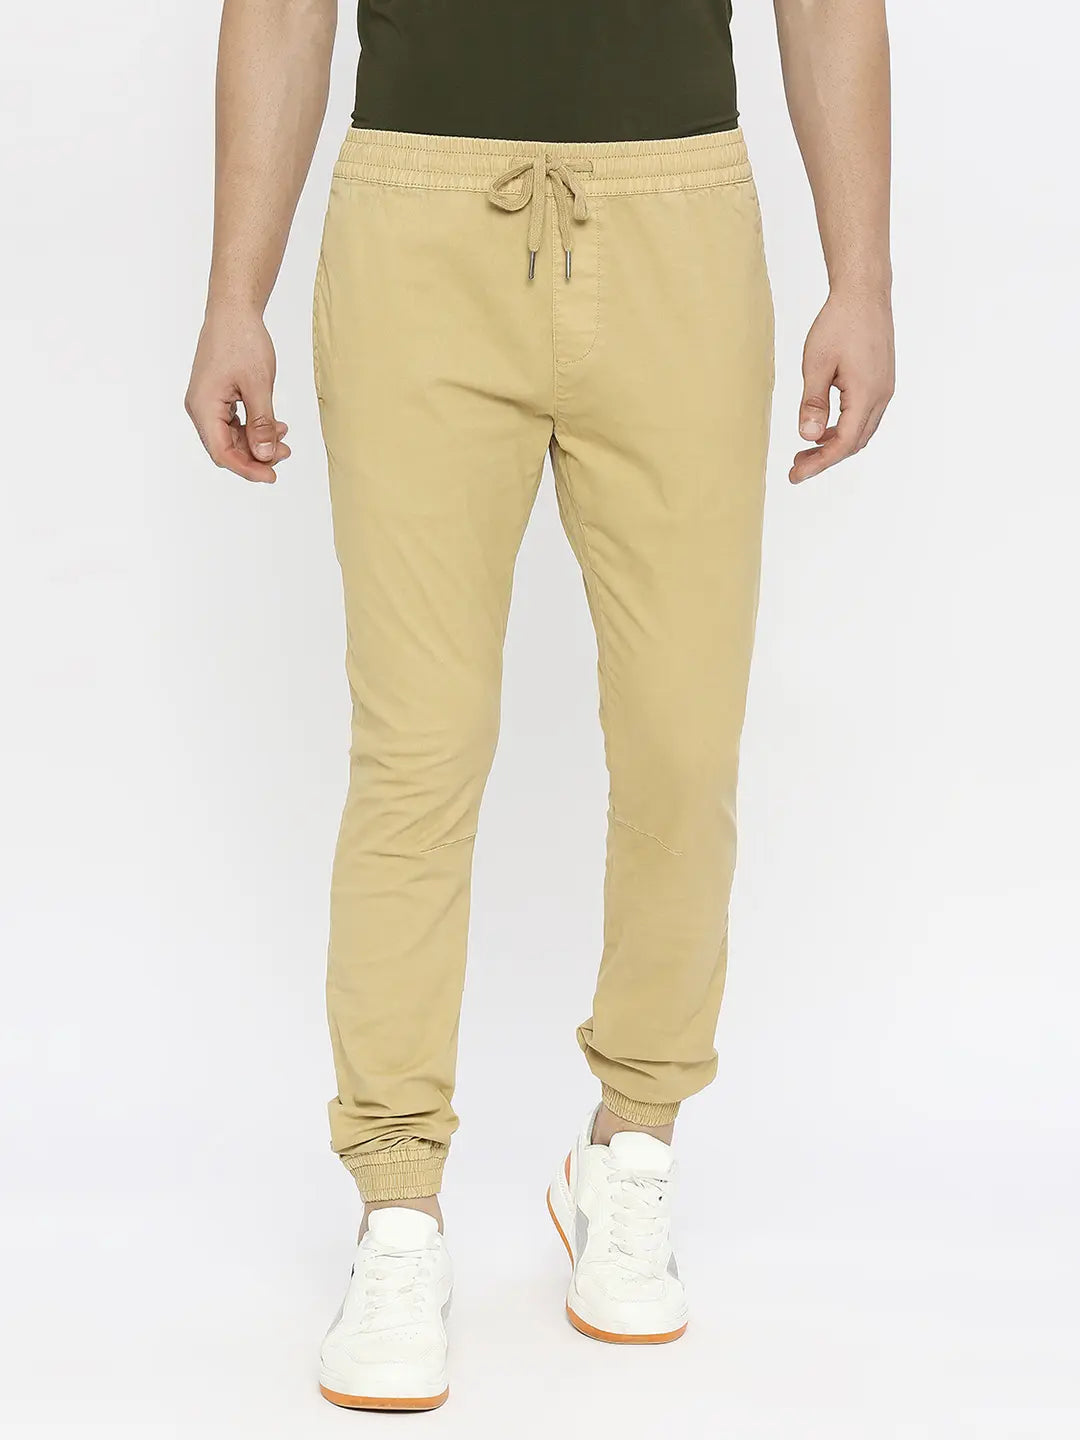 PETROL PANT | Elwood clothing, Khaki, Pants